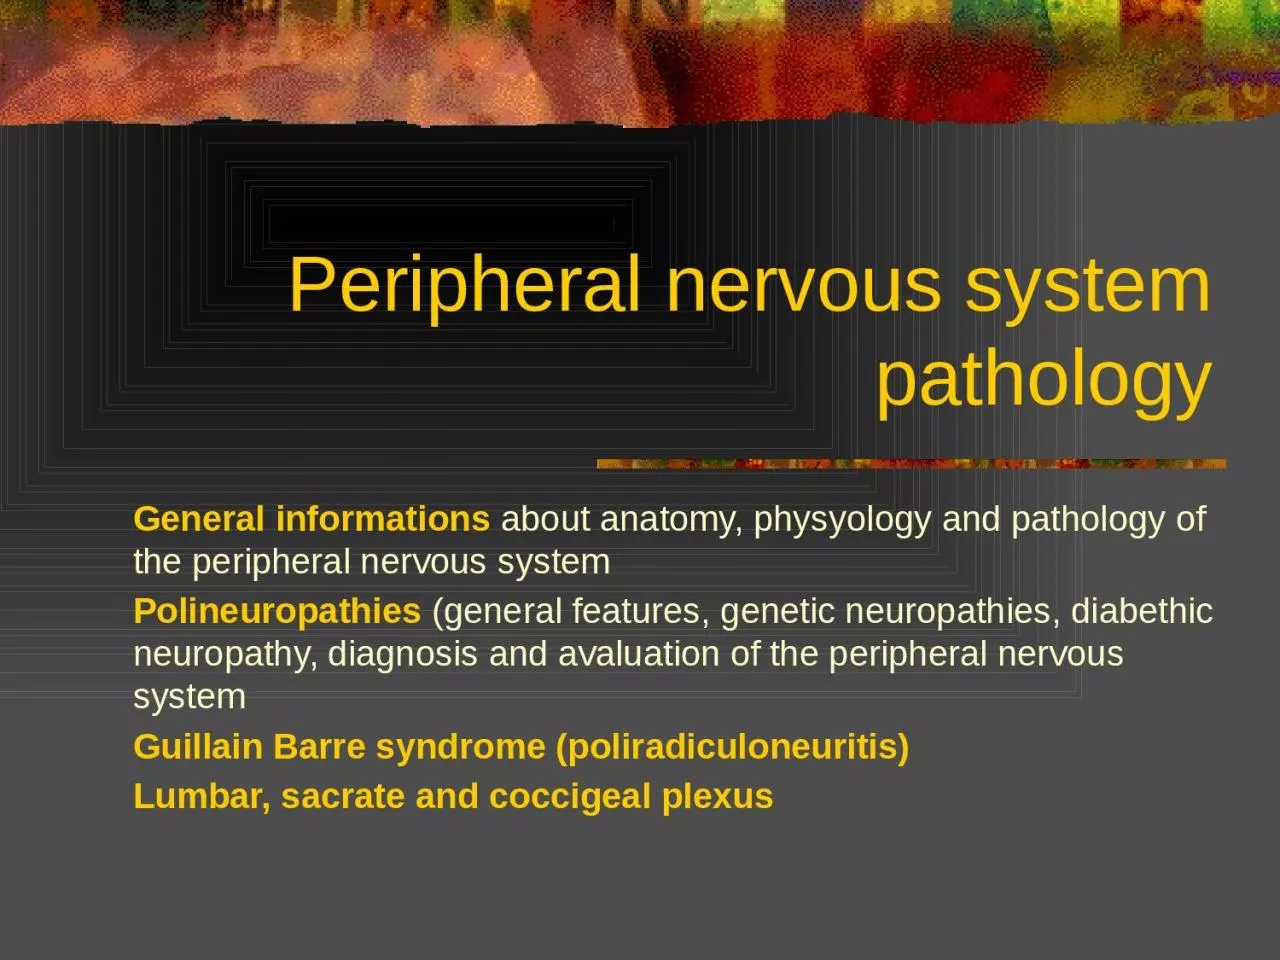 Peripheral nervous system pathology